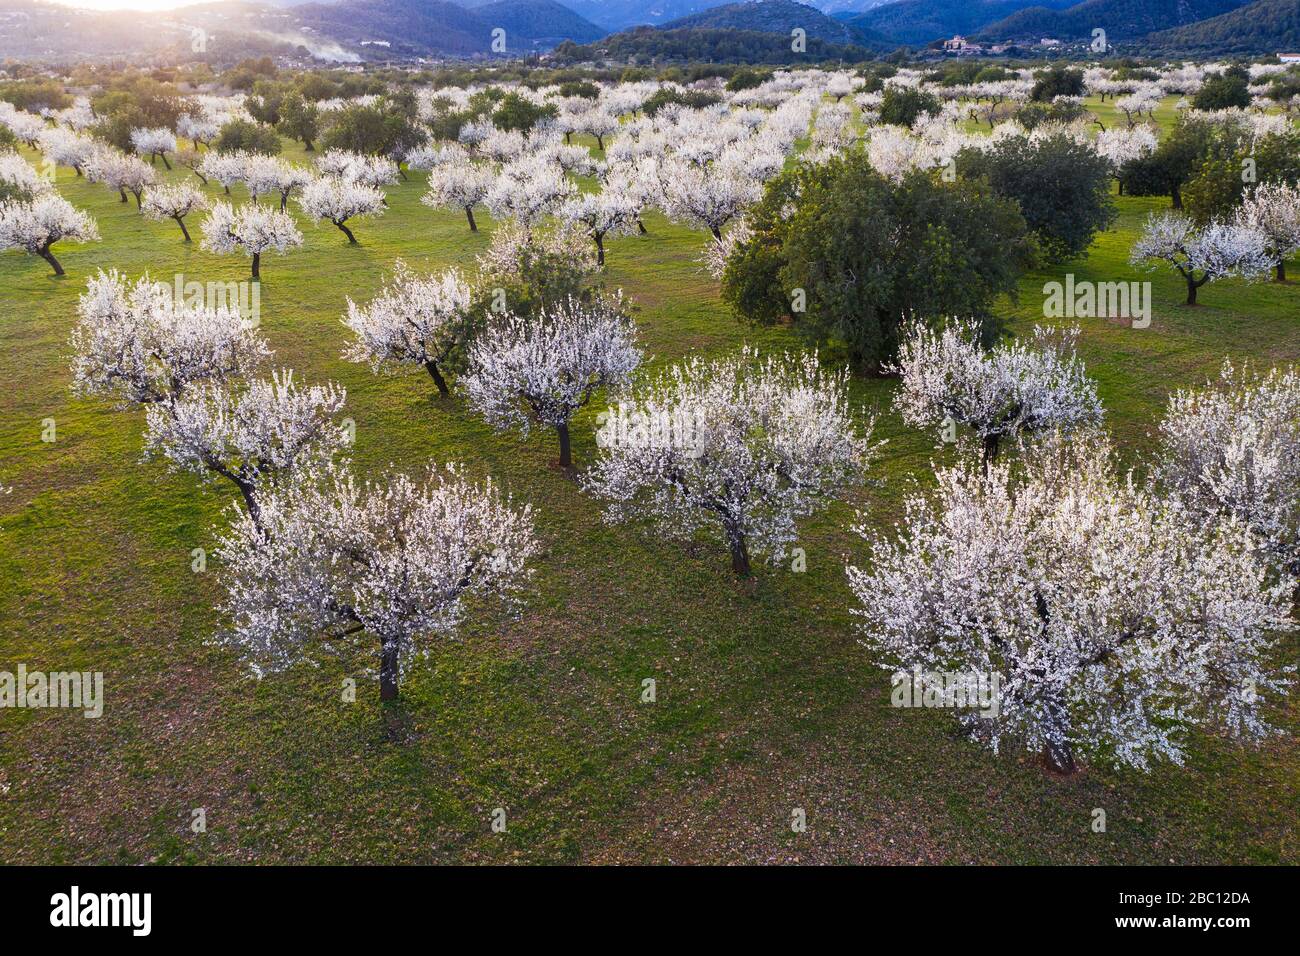 Mandelblüte, blühende Mandelbäume, Mandelplantage bei Bunyola, Serra de Tramuntana, Luftbild, Mallorca, Balearen, Spanien Foto Stock